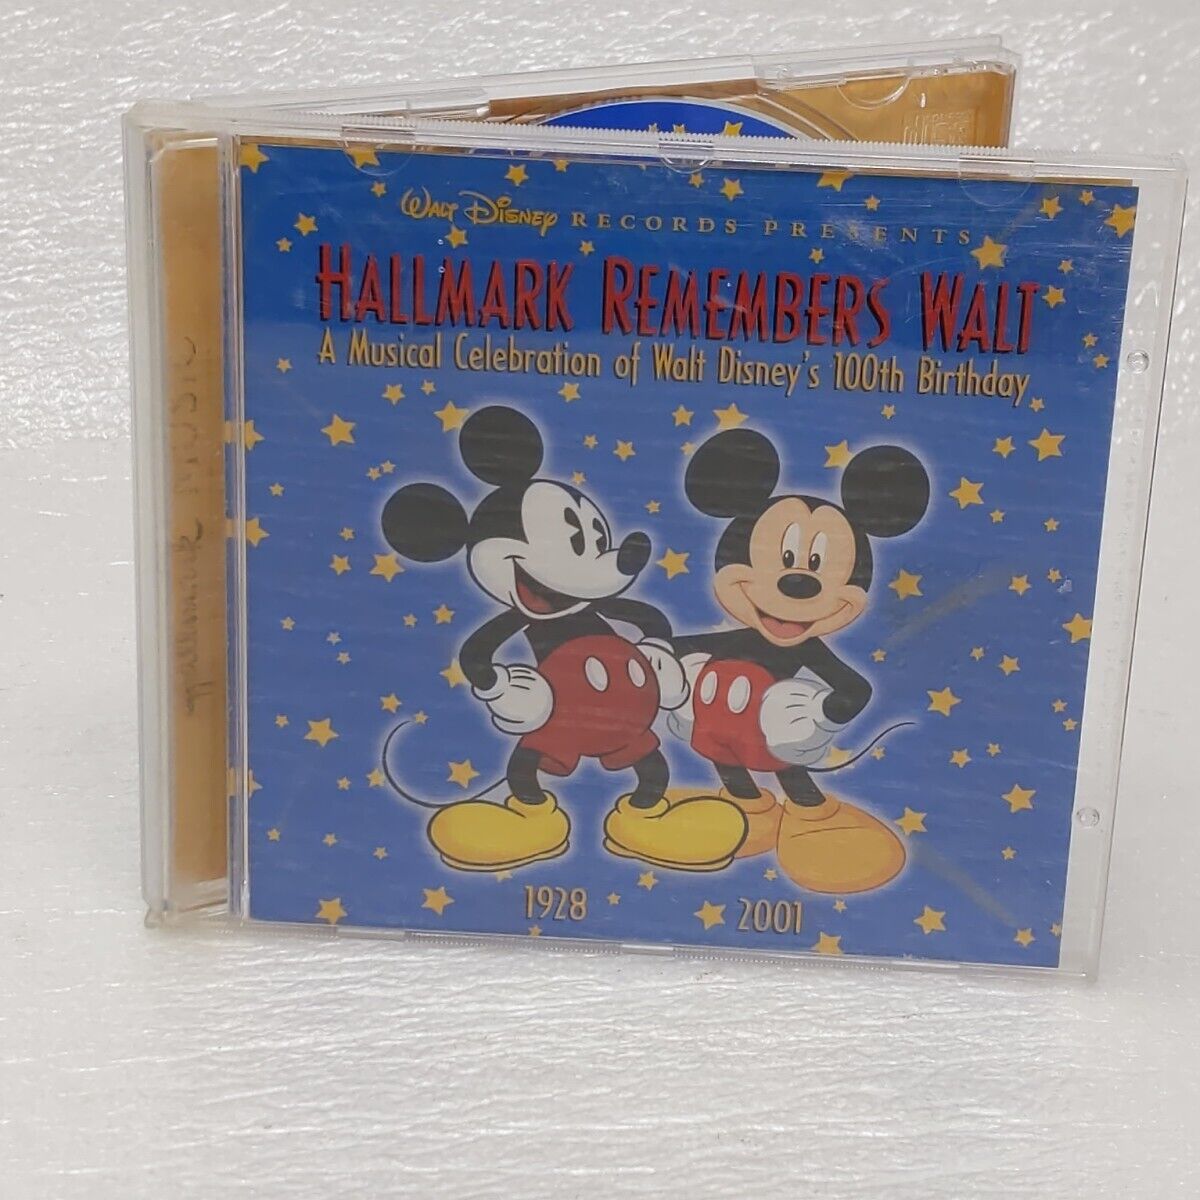 Hallmark Remembers Walt - Walt Disney\'s 100th Birthday Musical (CD 2001)